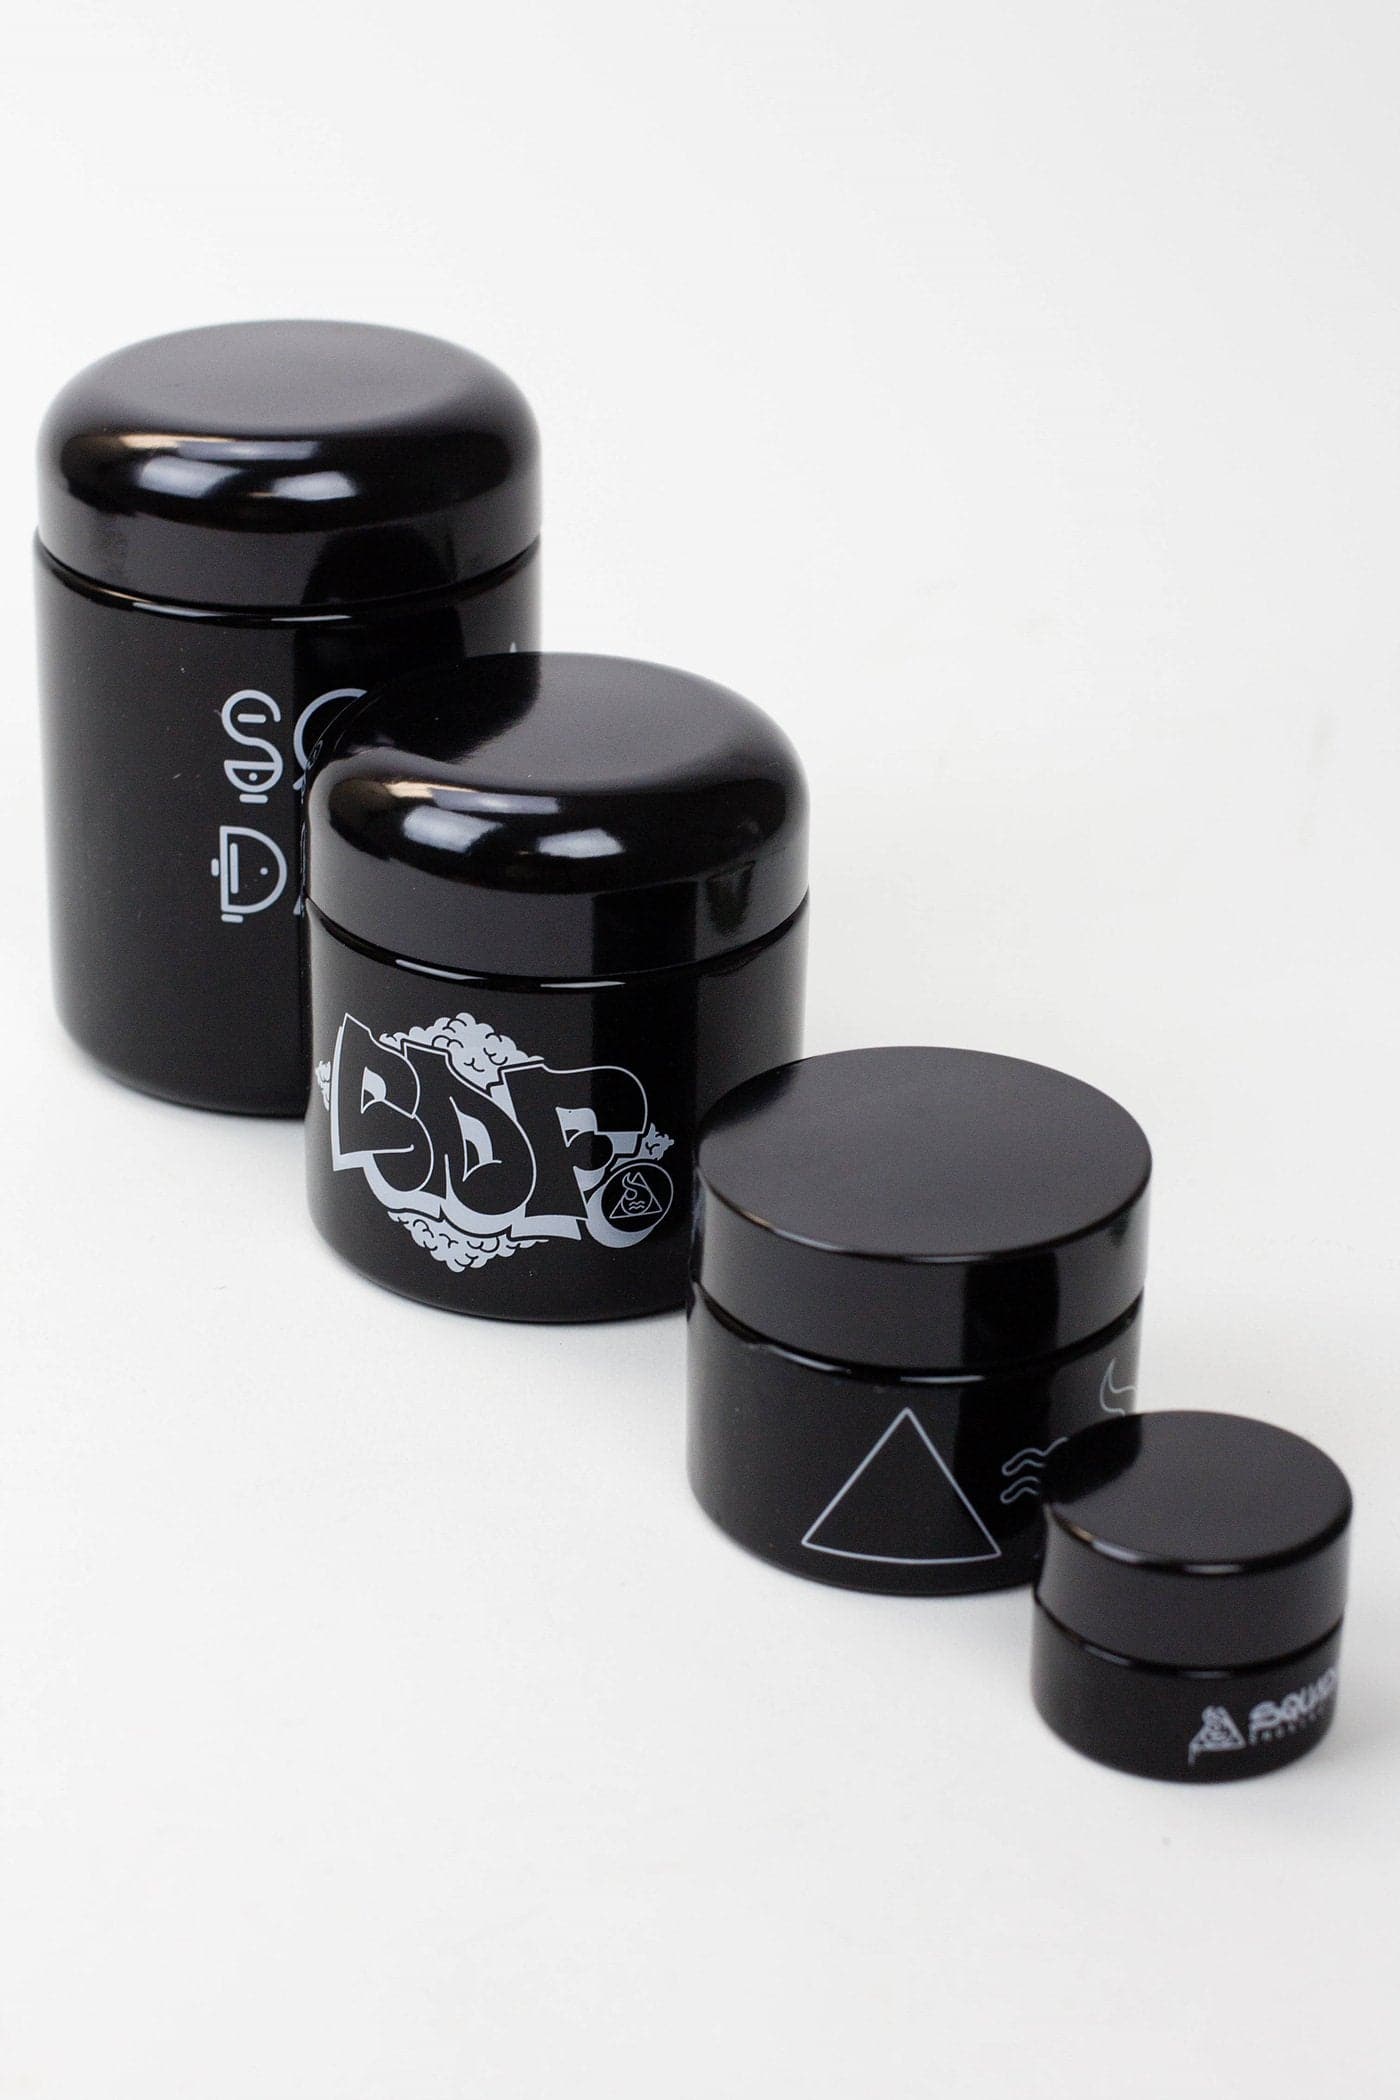 SDF Pote UV Holder 5 ml Glass Jar